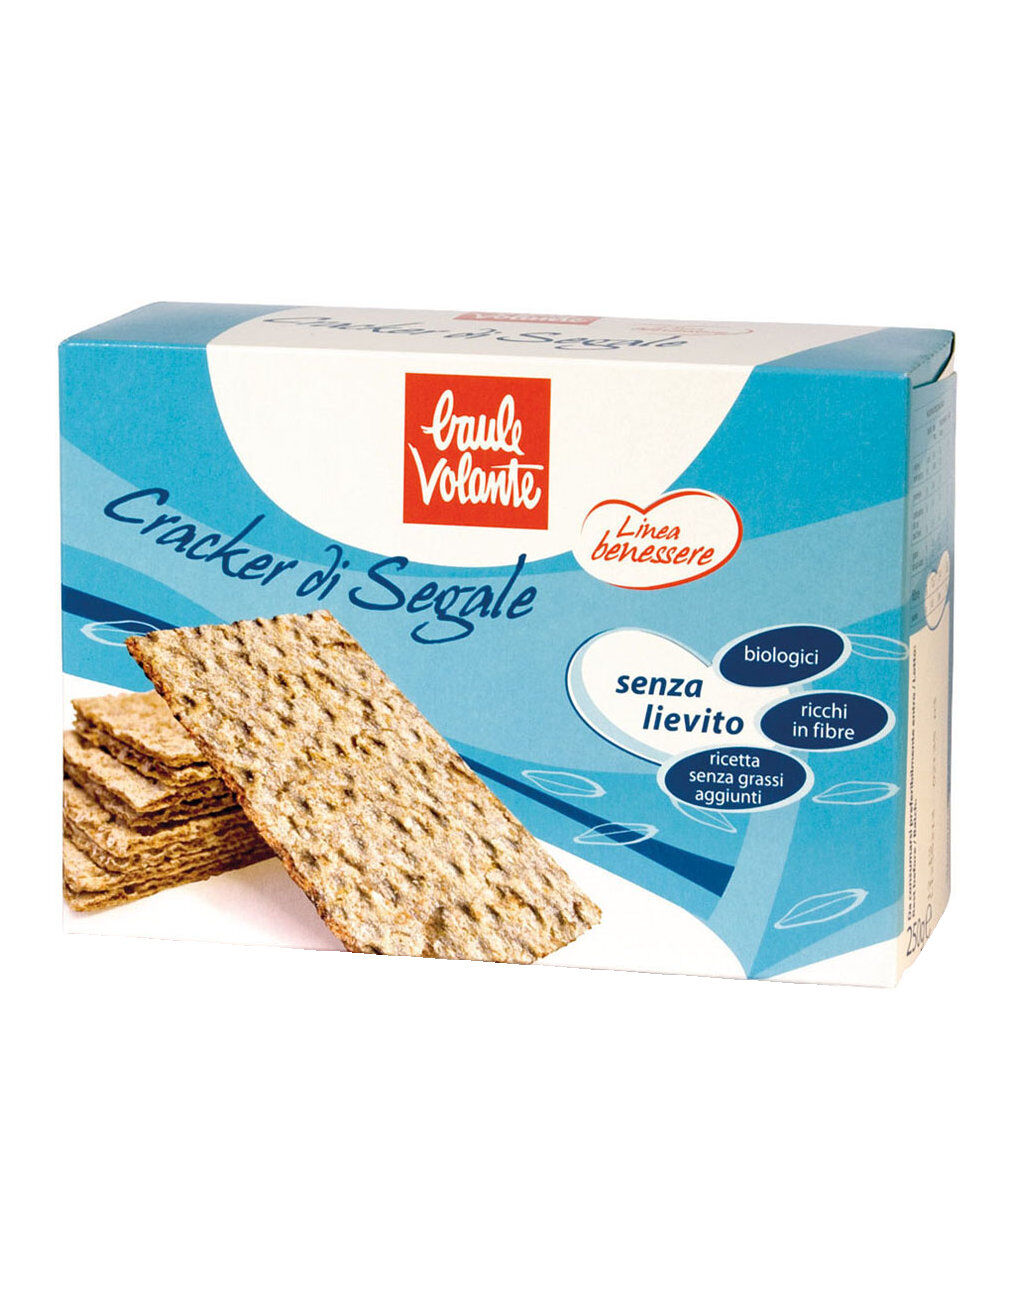 BAULE VOLANTE Cracker Di Segale 250 Grammi